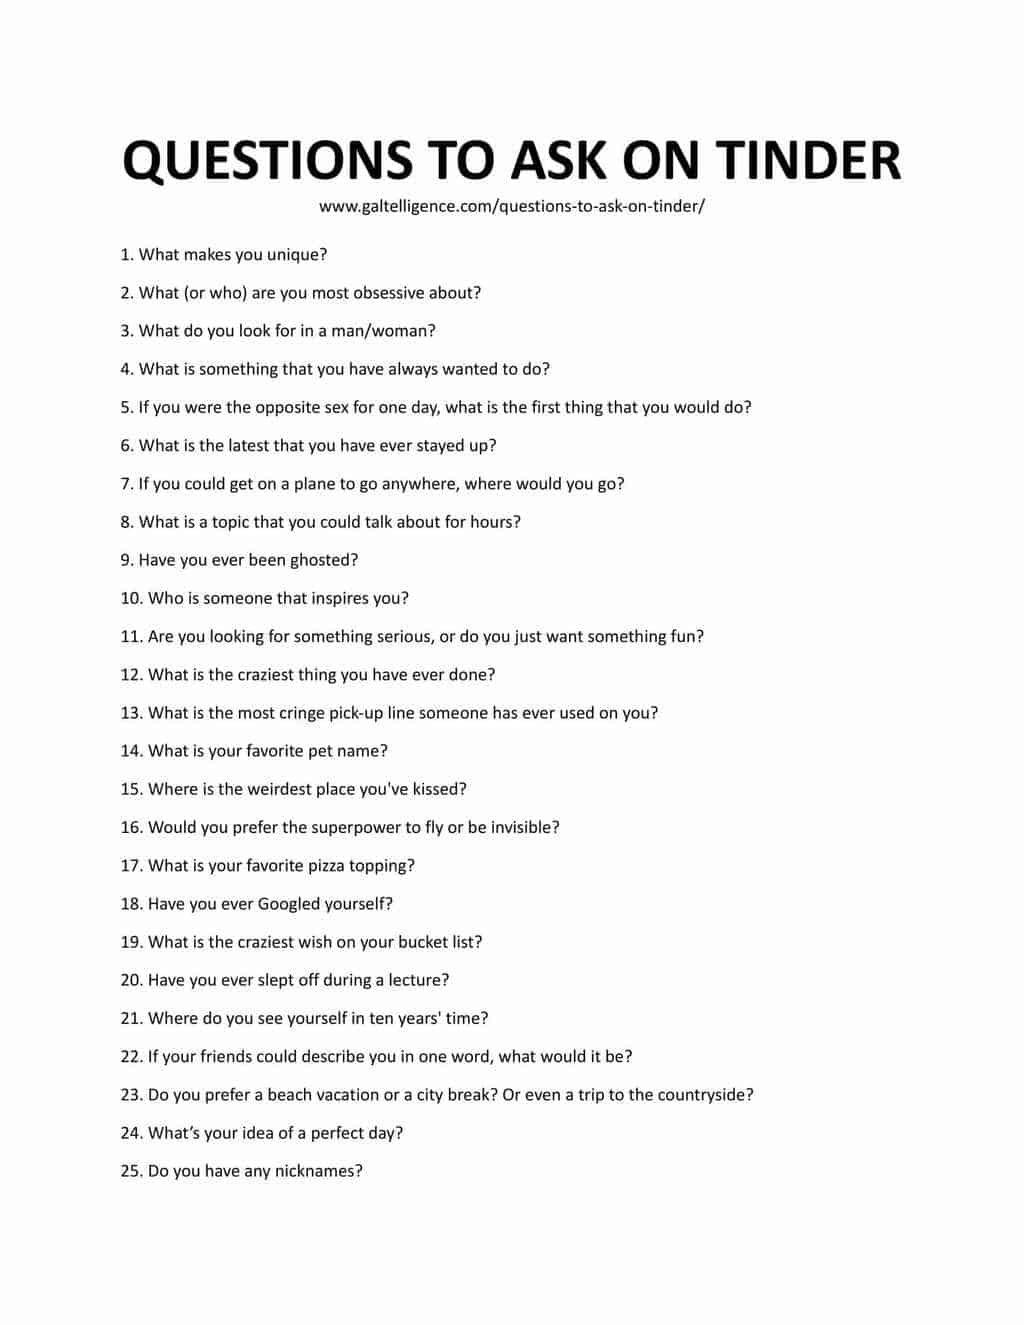 Tinder questions